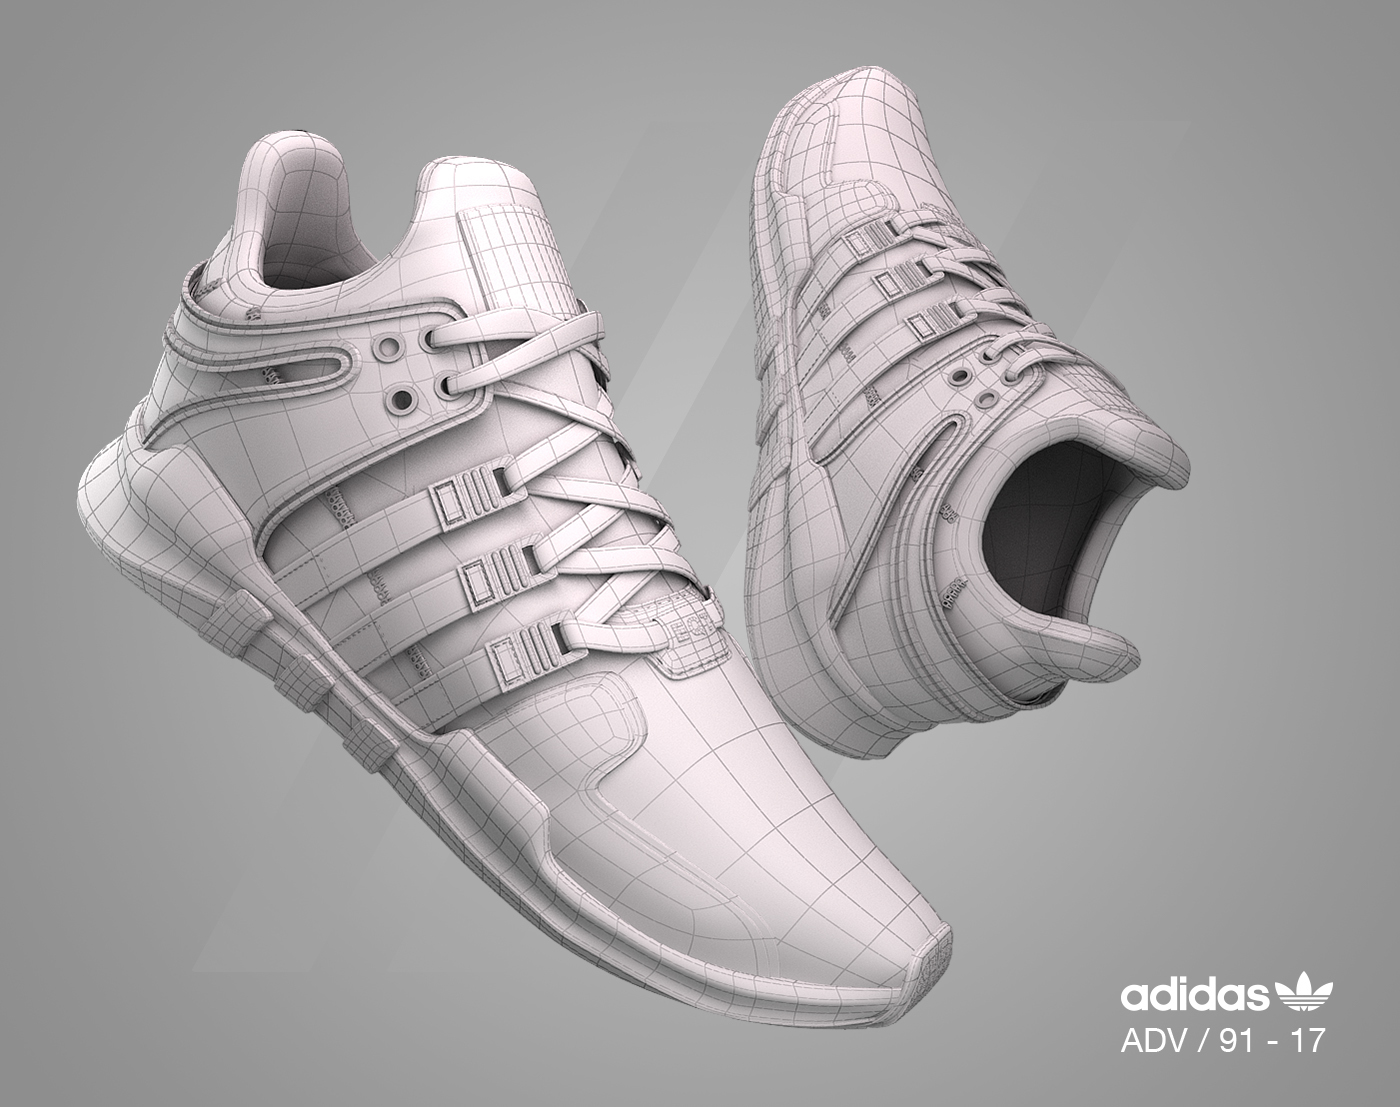 Adidas EQT - CGI \u0026 3D Print on Behance